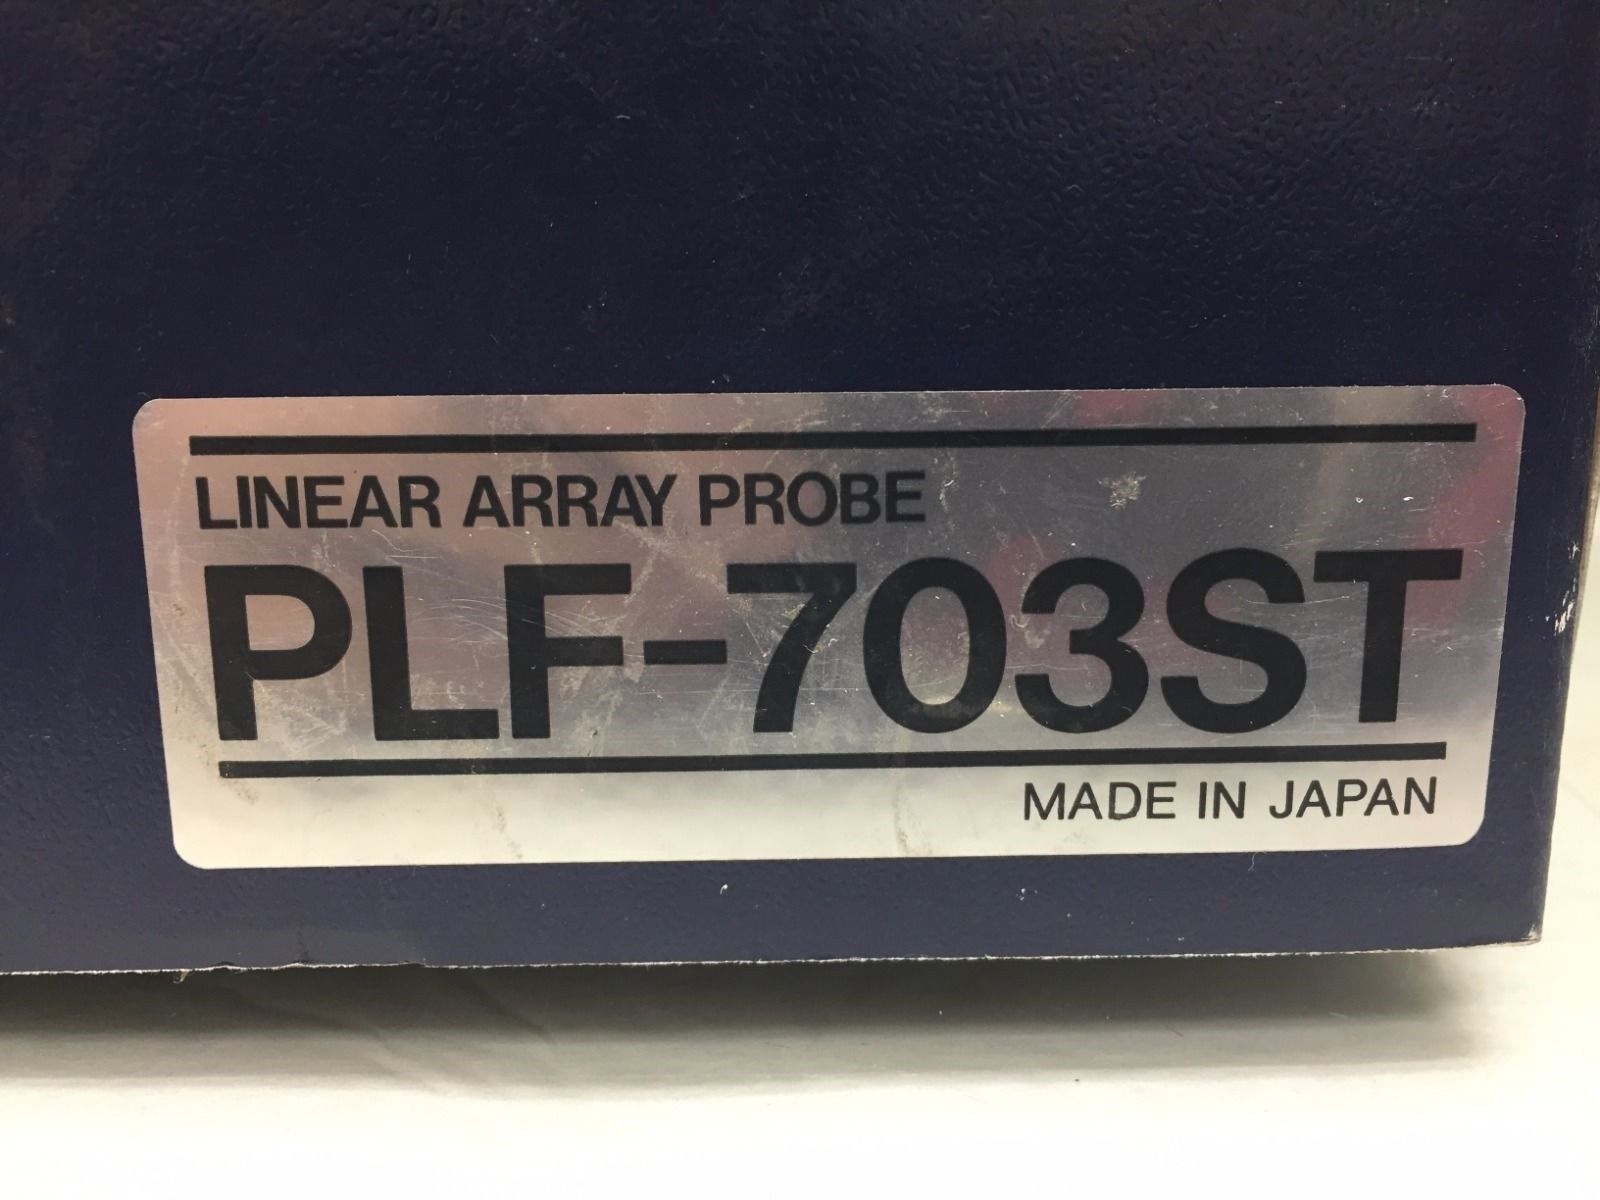 Toshiba PLF-703ST 7.5MHz Linear Array Ultrasound Transducer Probe DIAGNOSTIC ULTRASOUND MACHINES FOR SALE